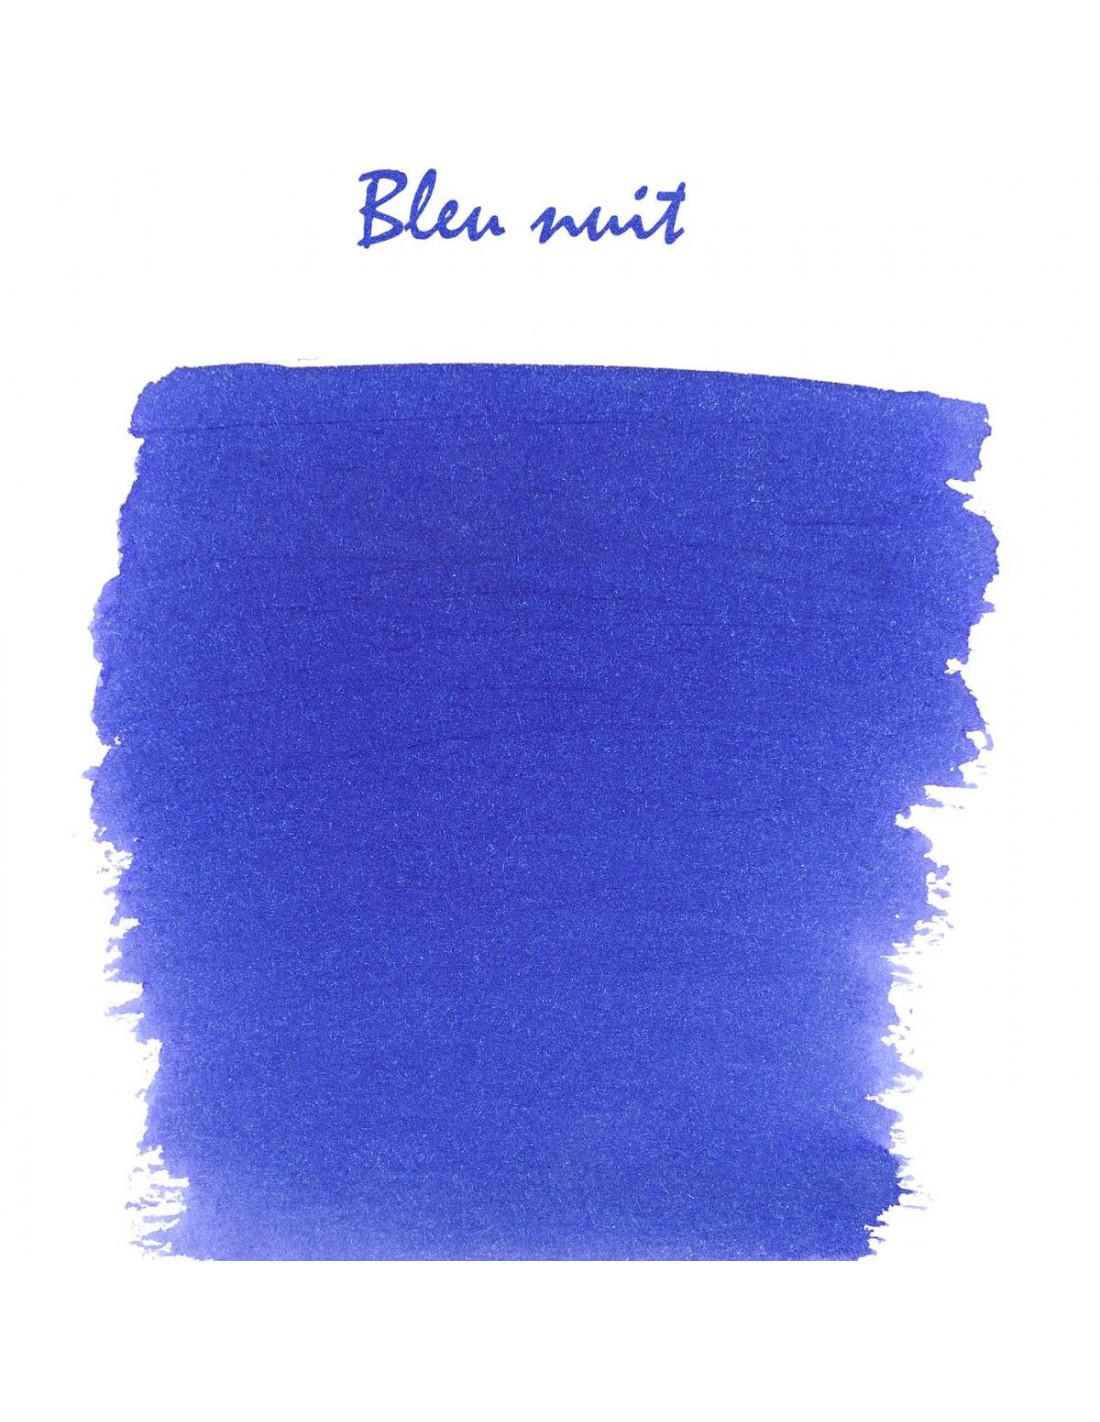 Jacques Herbin Ink - Bleu Nuit - Night Blue - Bottle 30ml